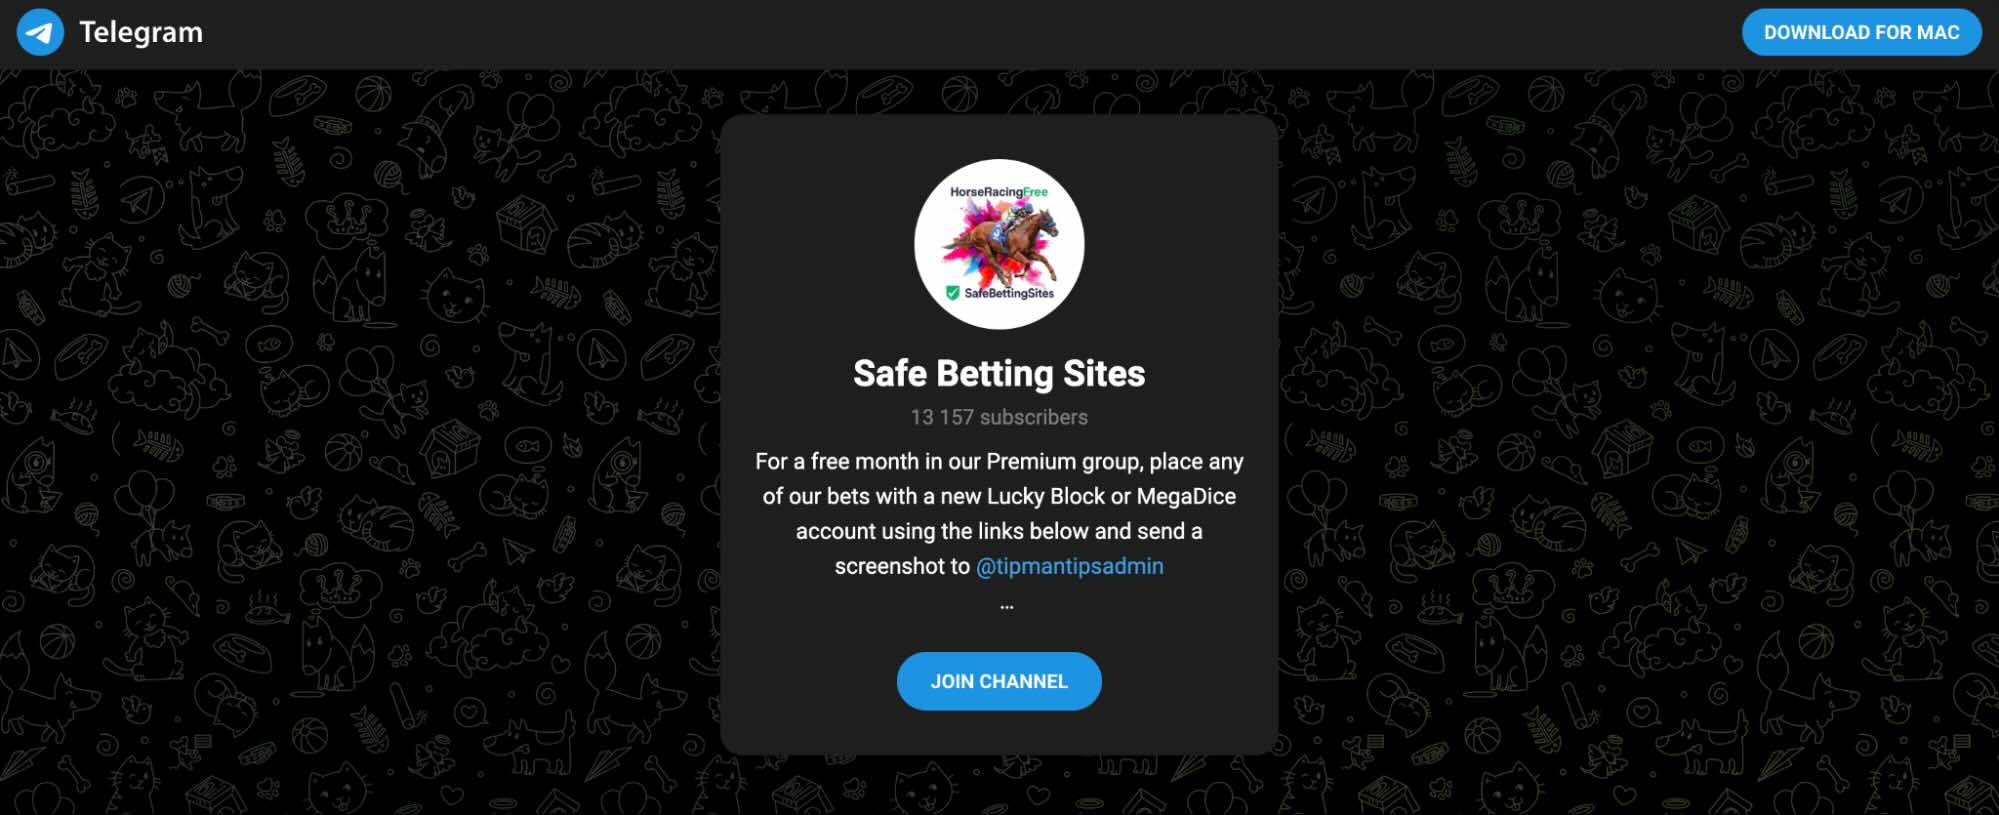 SafeBettingSites Telegram login page - the best Telegram betting channels